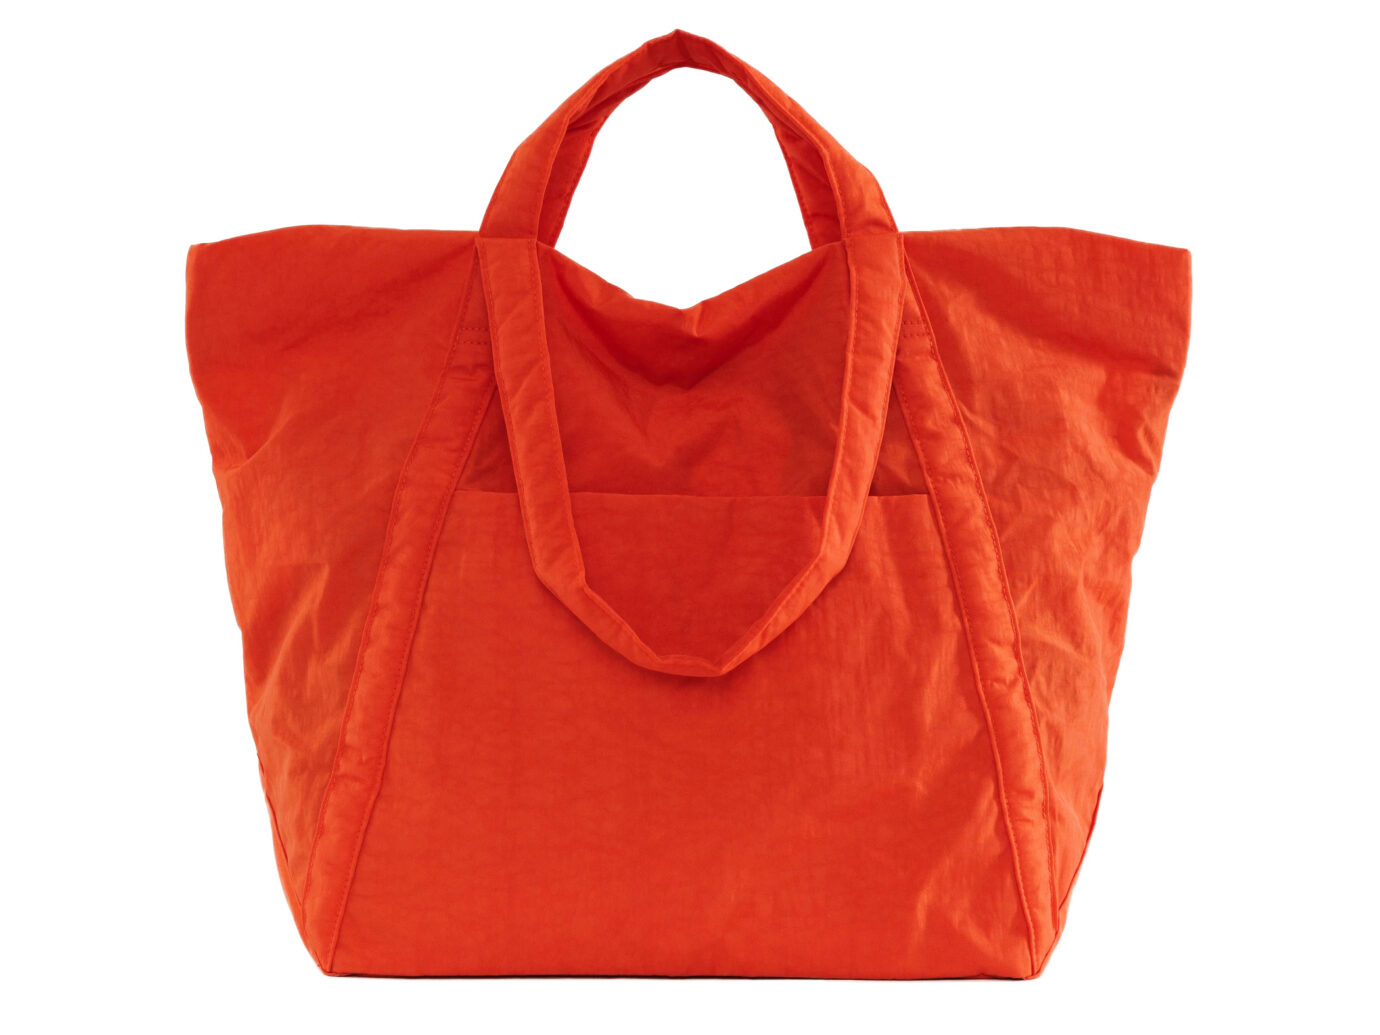 grocery bag overnight bag travel bag Medium size tote bag